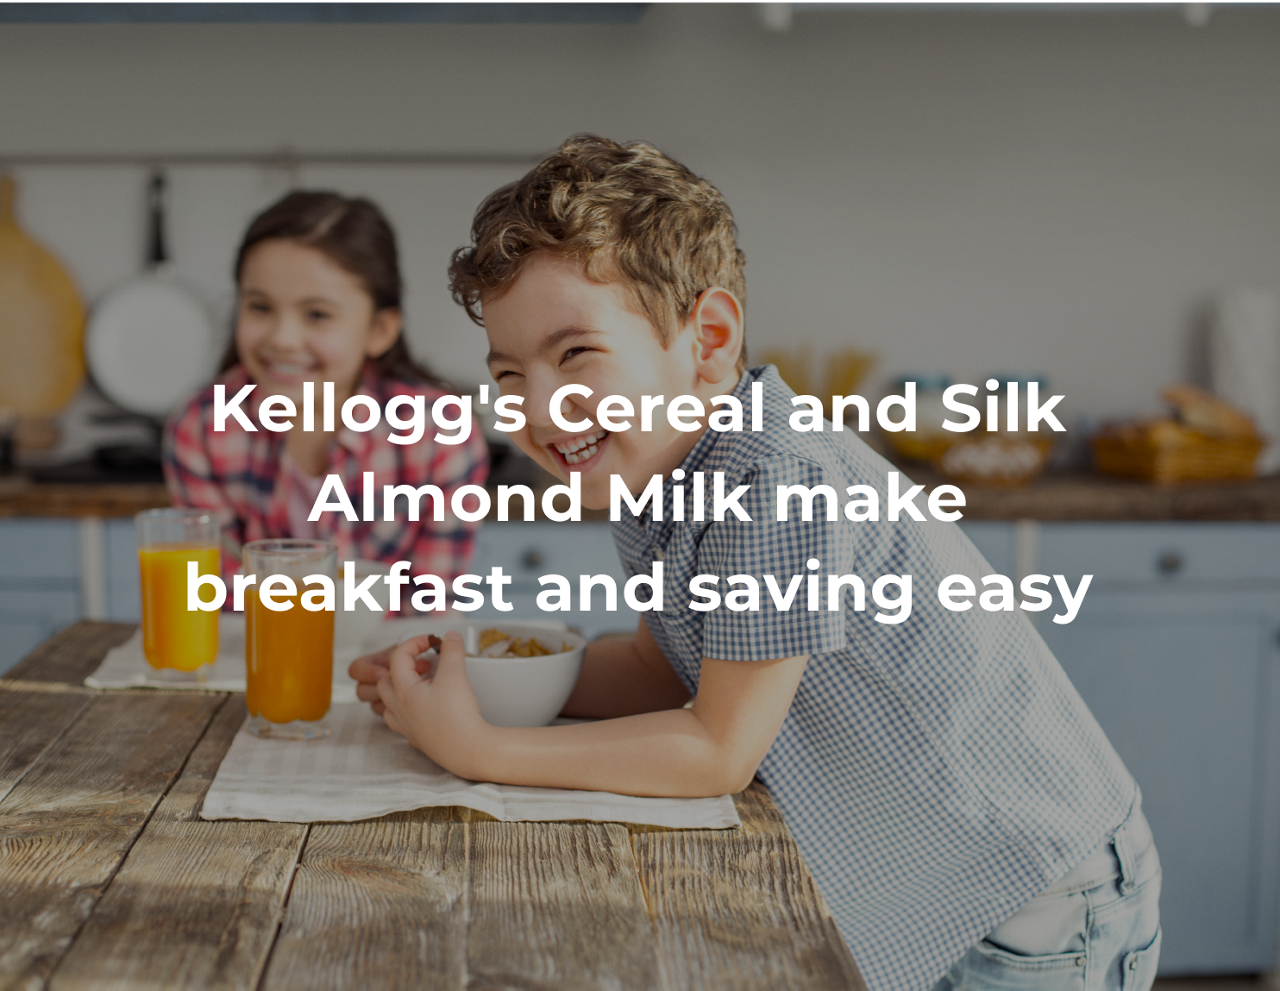 Kellogg's Cereal and Silk Almond Milk make breakfast and saving easy